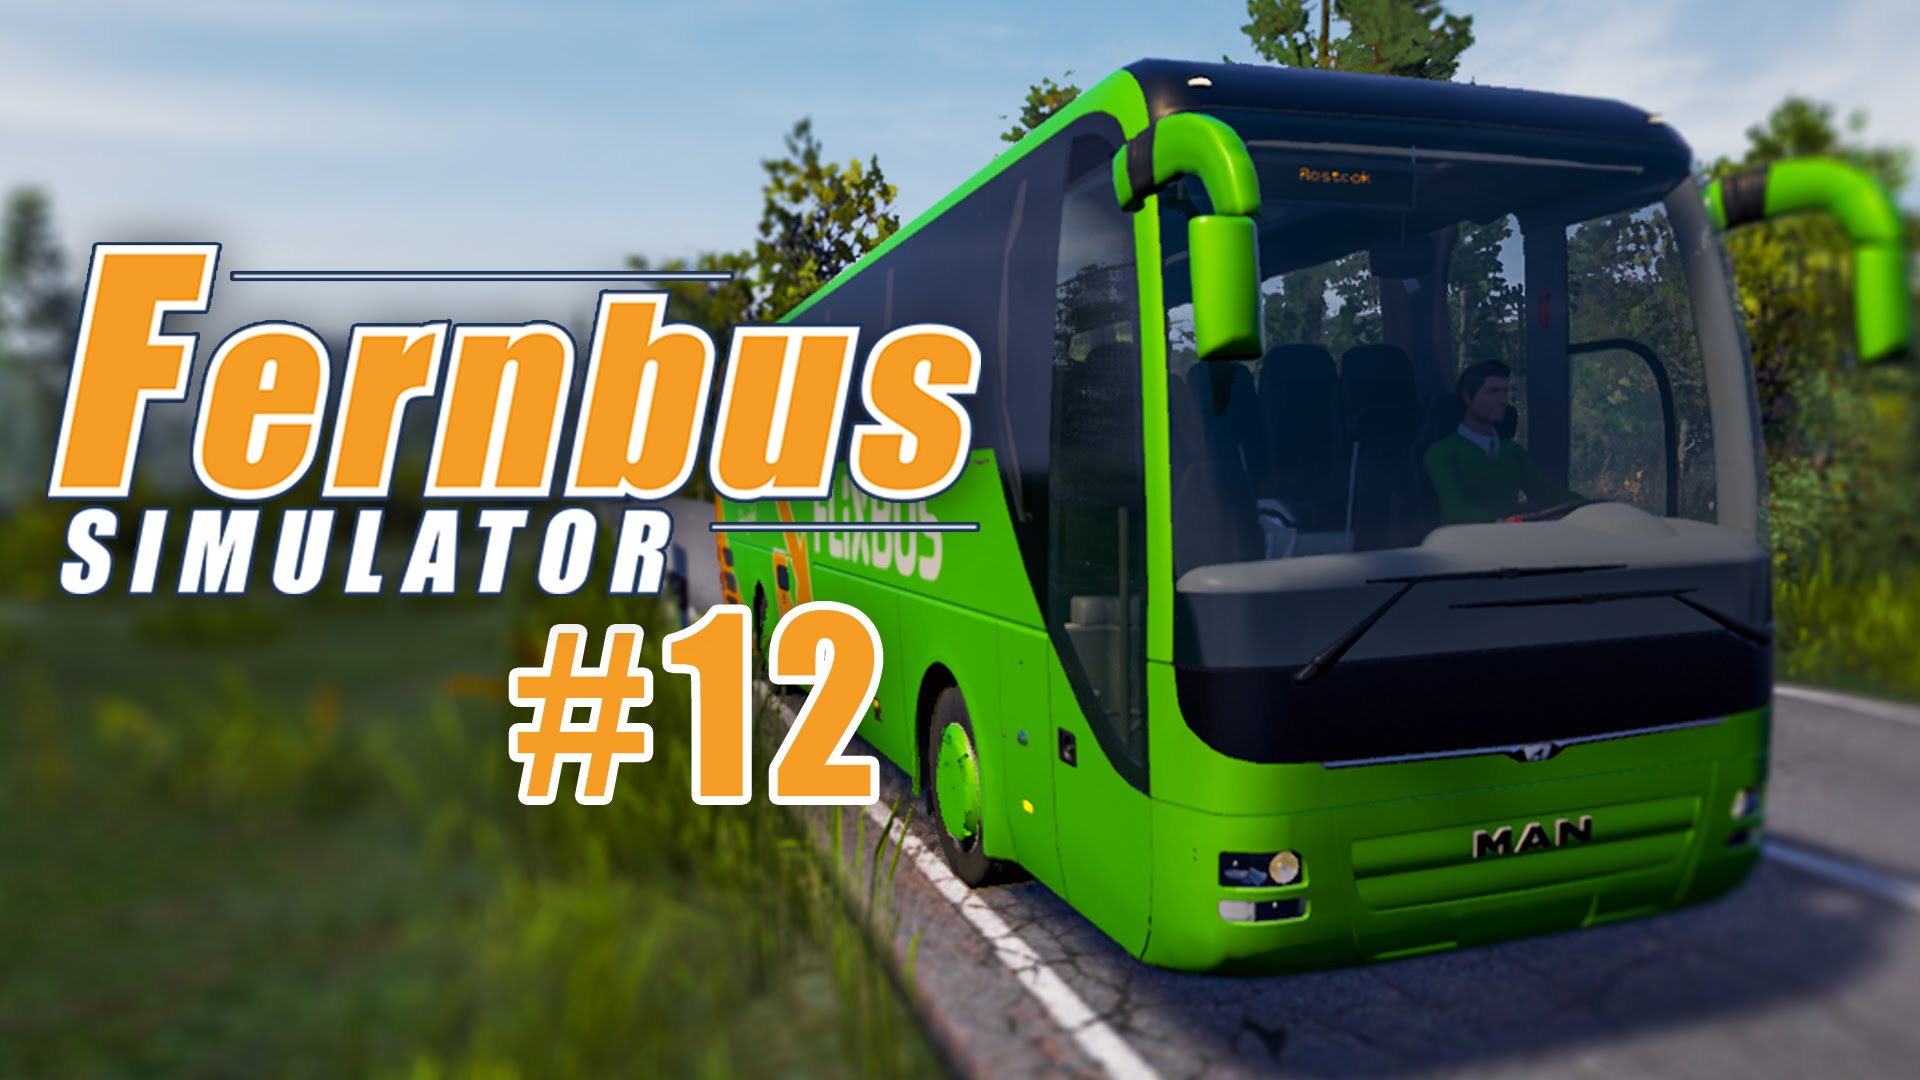 fernbus simulator online play